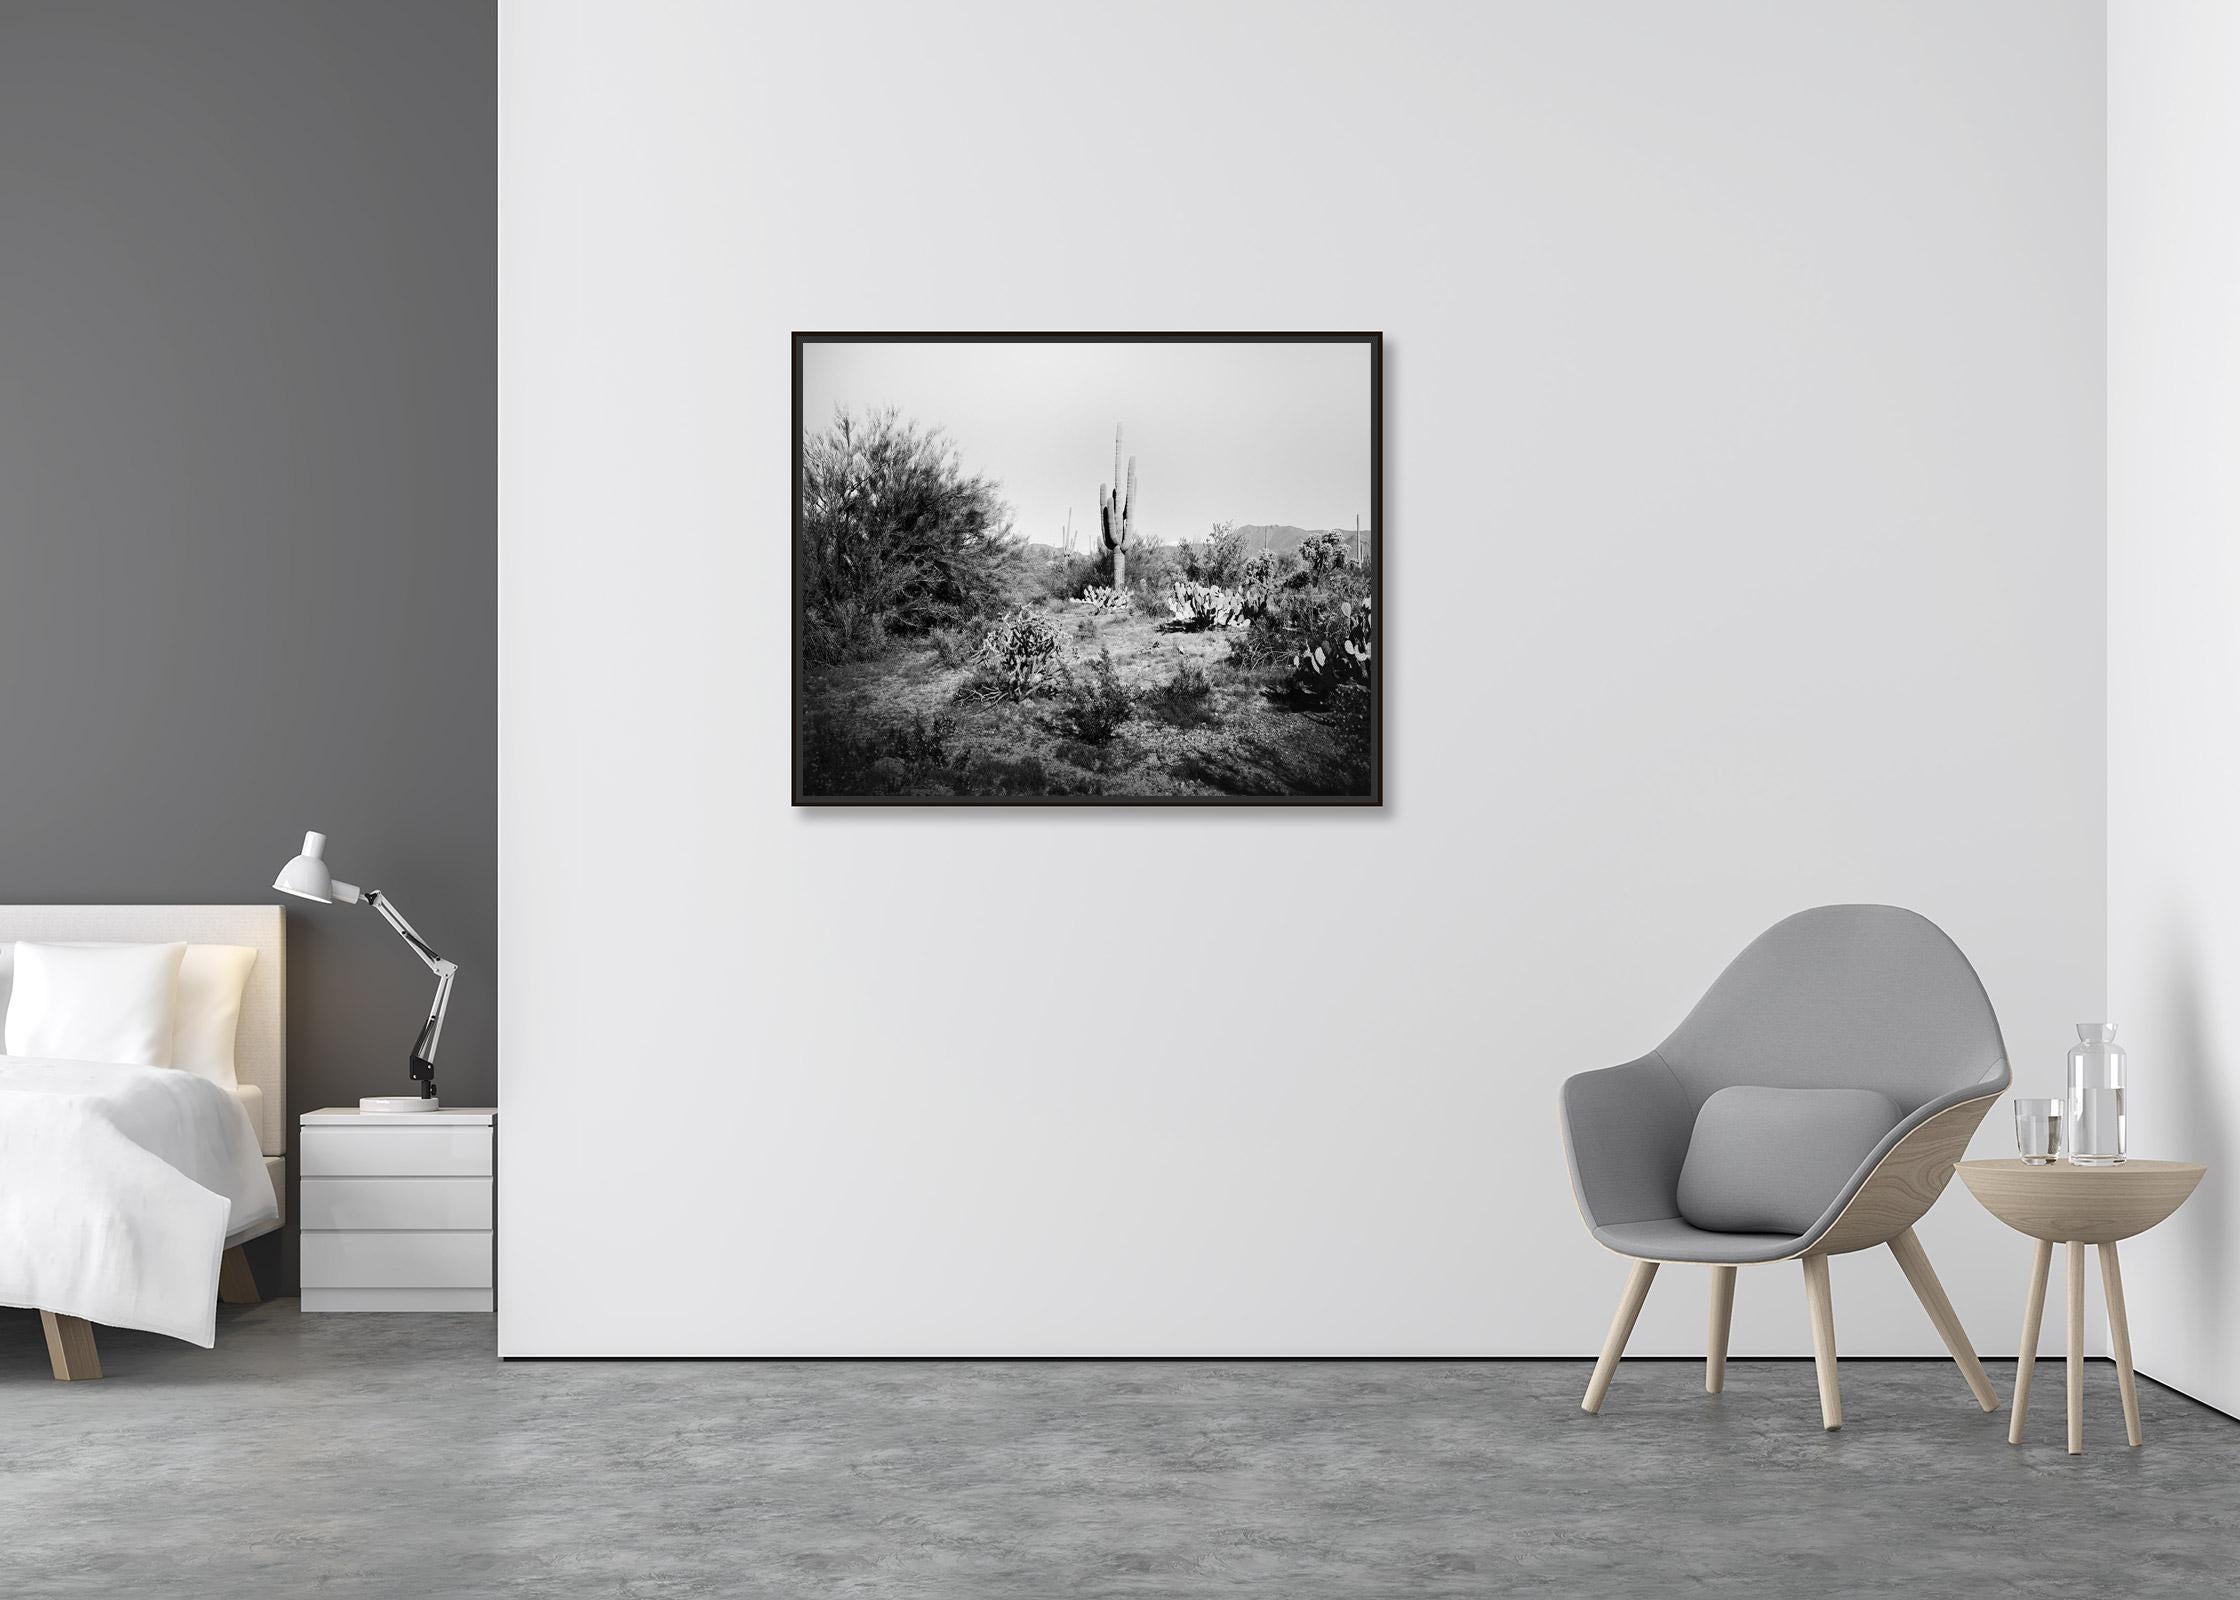 Saguaro Cactus, National Park, Arizona, USA, black and white landscape photo - Contemporary Photograph by Gerald Berghammer